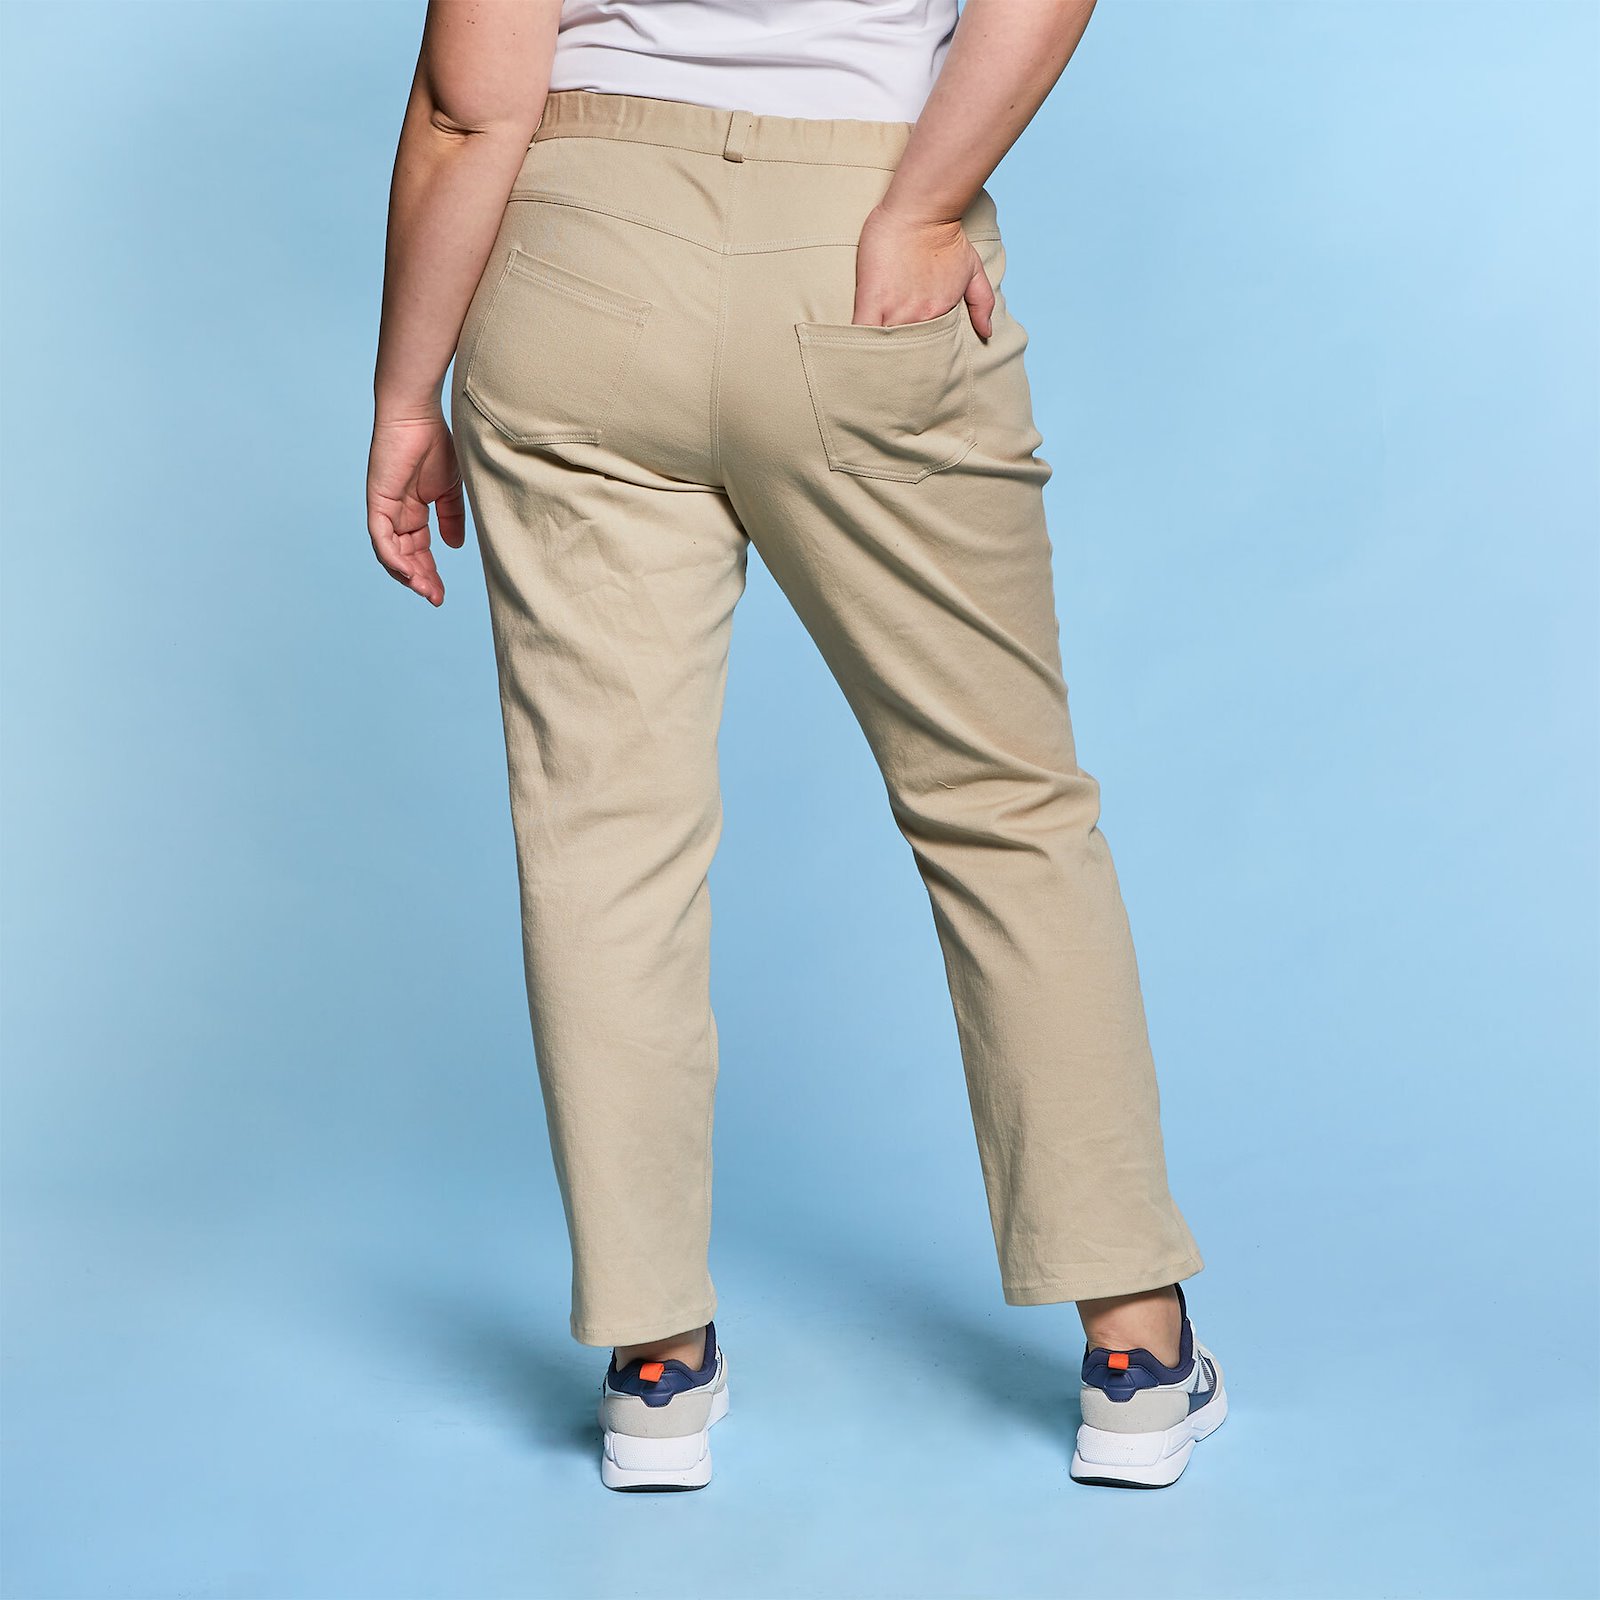 Classic jeans w. elastic waistban, 58/30 p70007000_p70007001_p70007002_p70007003_p70007004_pack_e